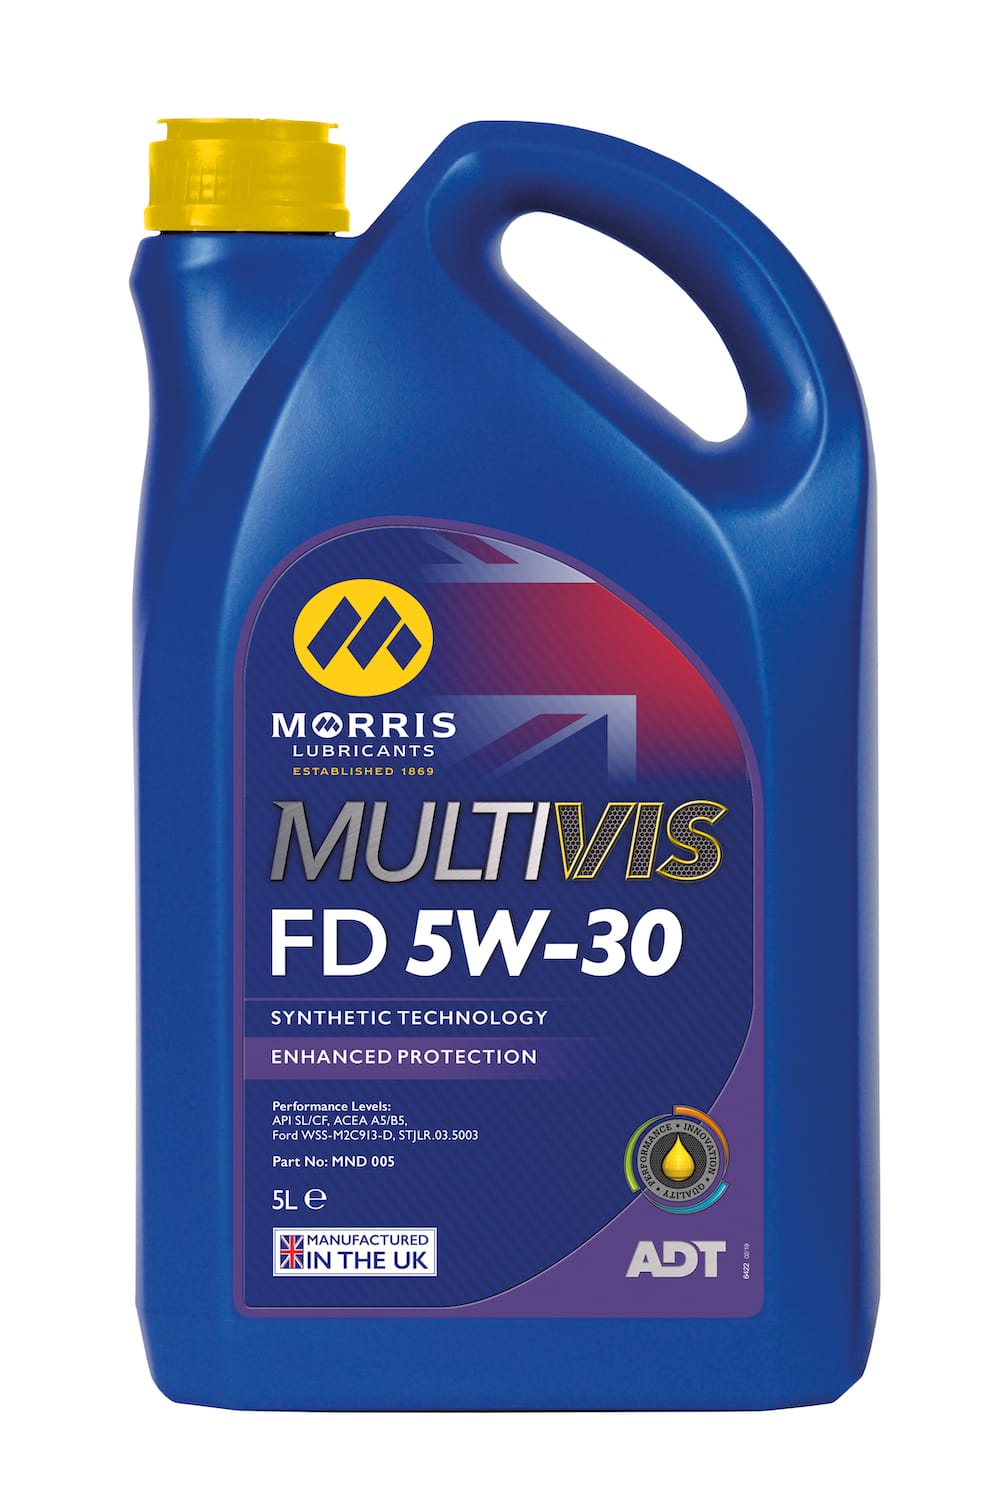 Morris Multivis ADT FD 5W-30